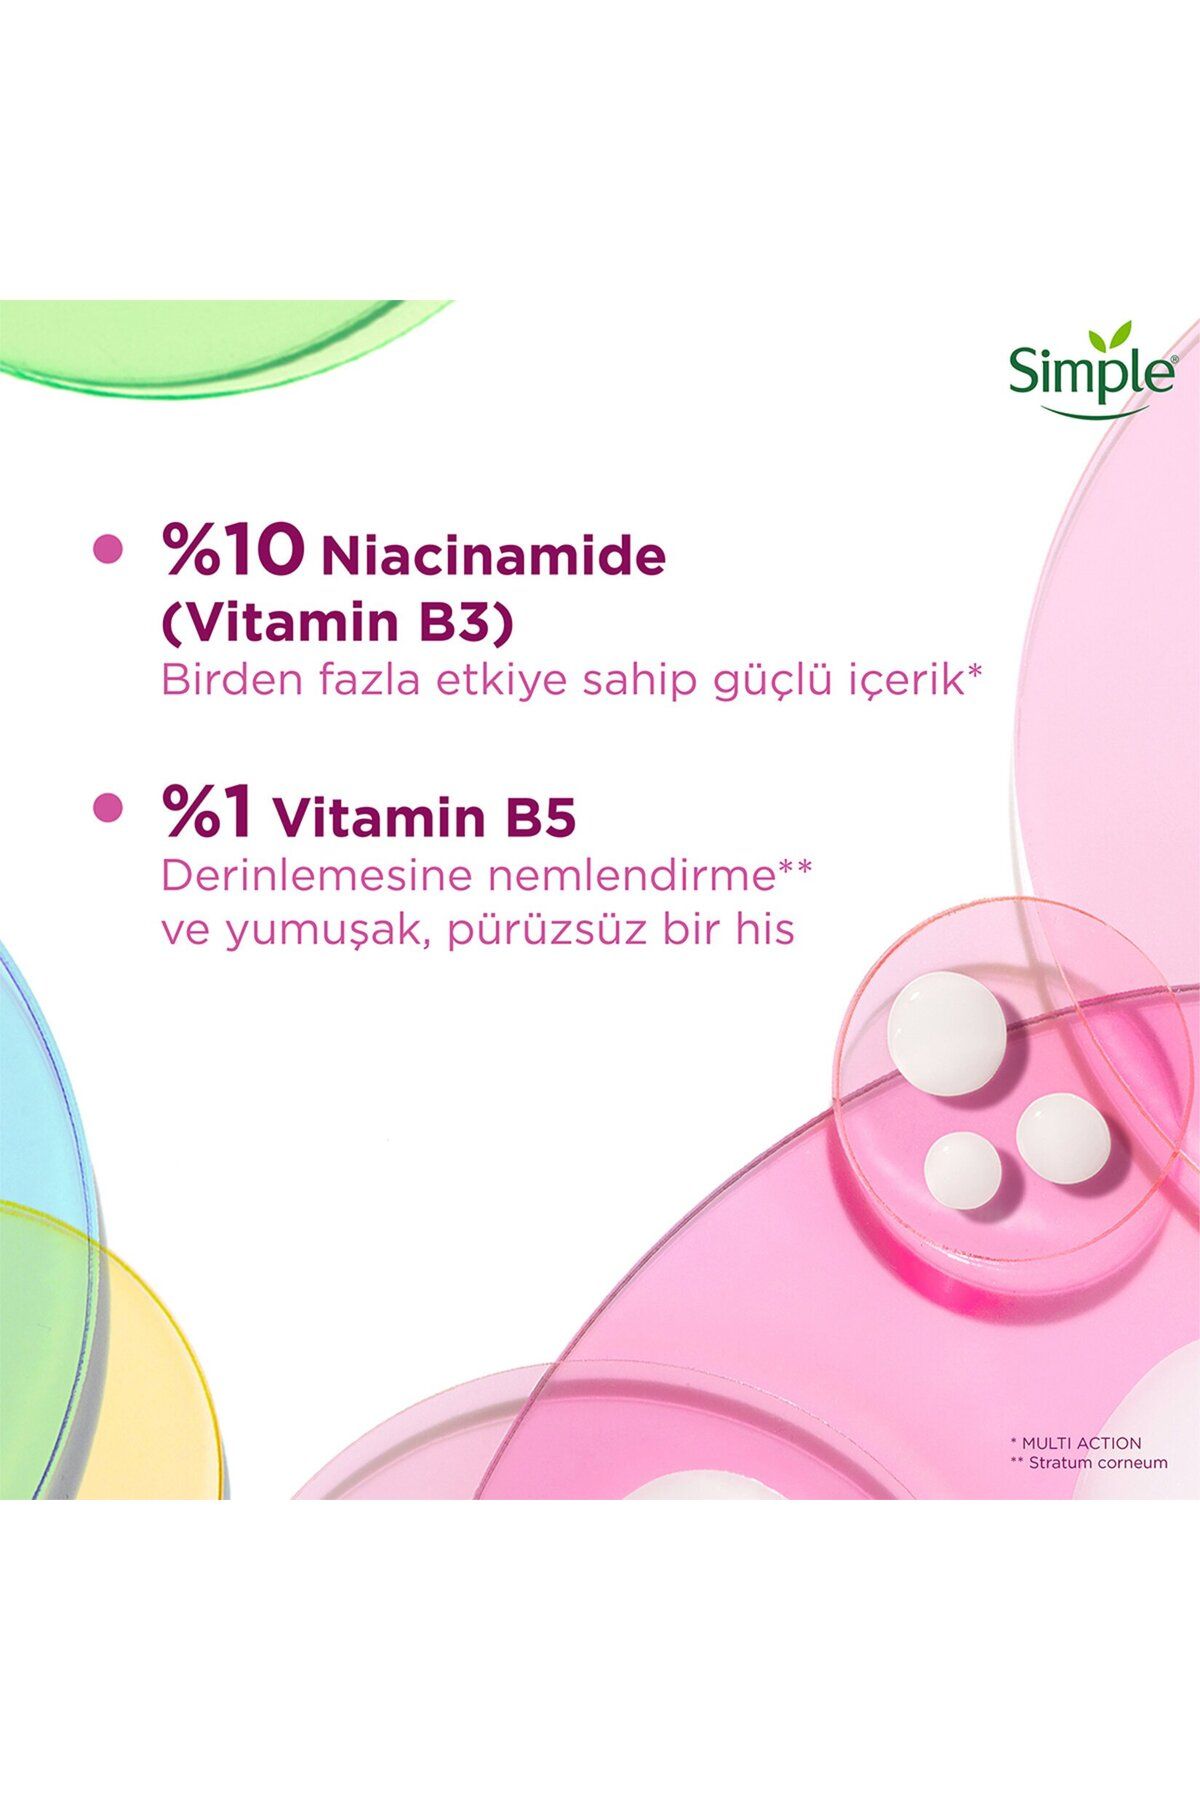 Simple سرم تقویت‌کننده با ۱۰٪ ویتامین B3 نیاسینامید برای توازن رنگ پوست ۳۰ میلی‌لیتر